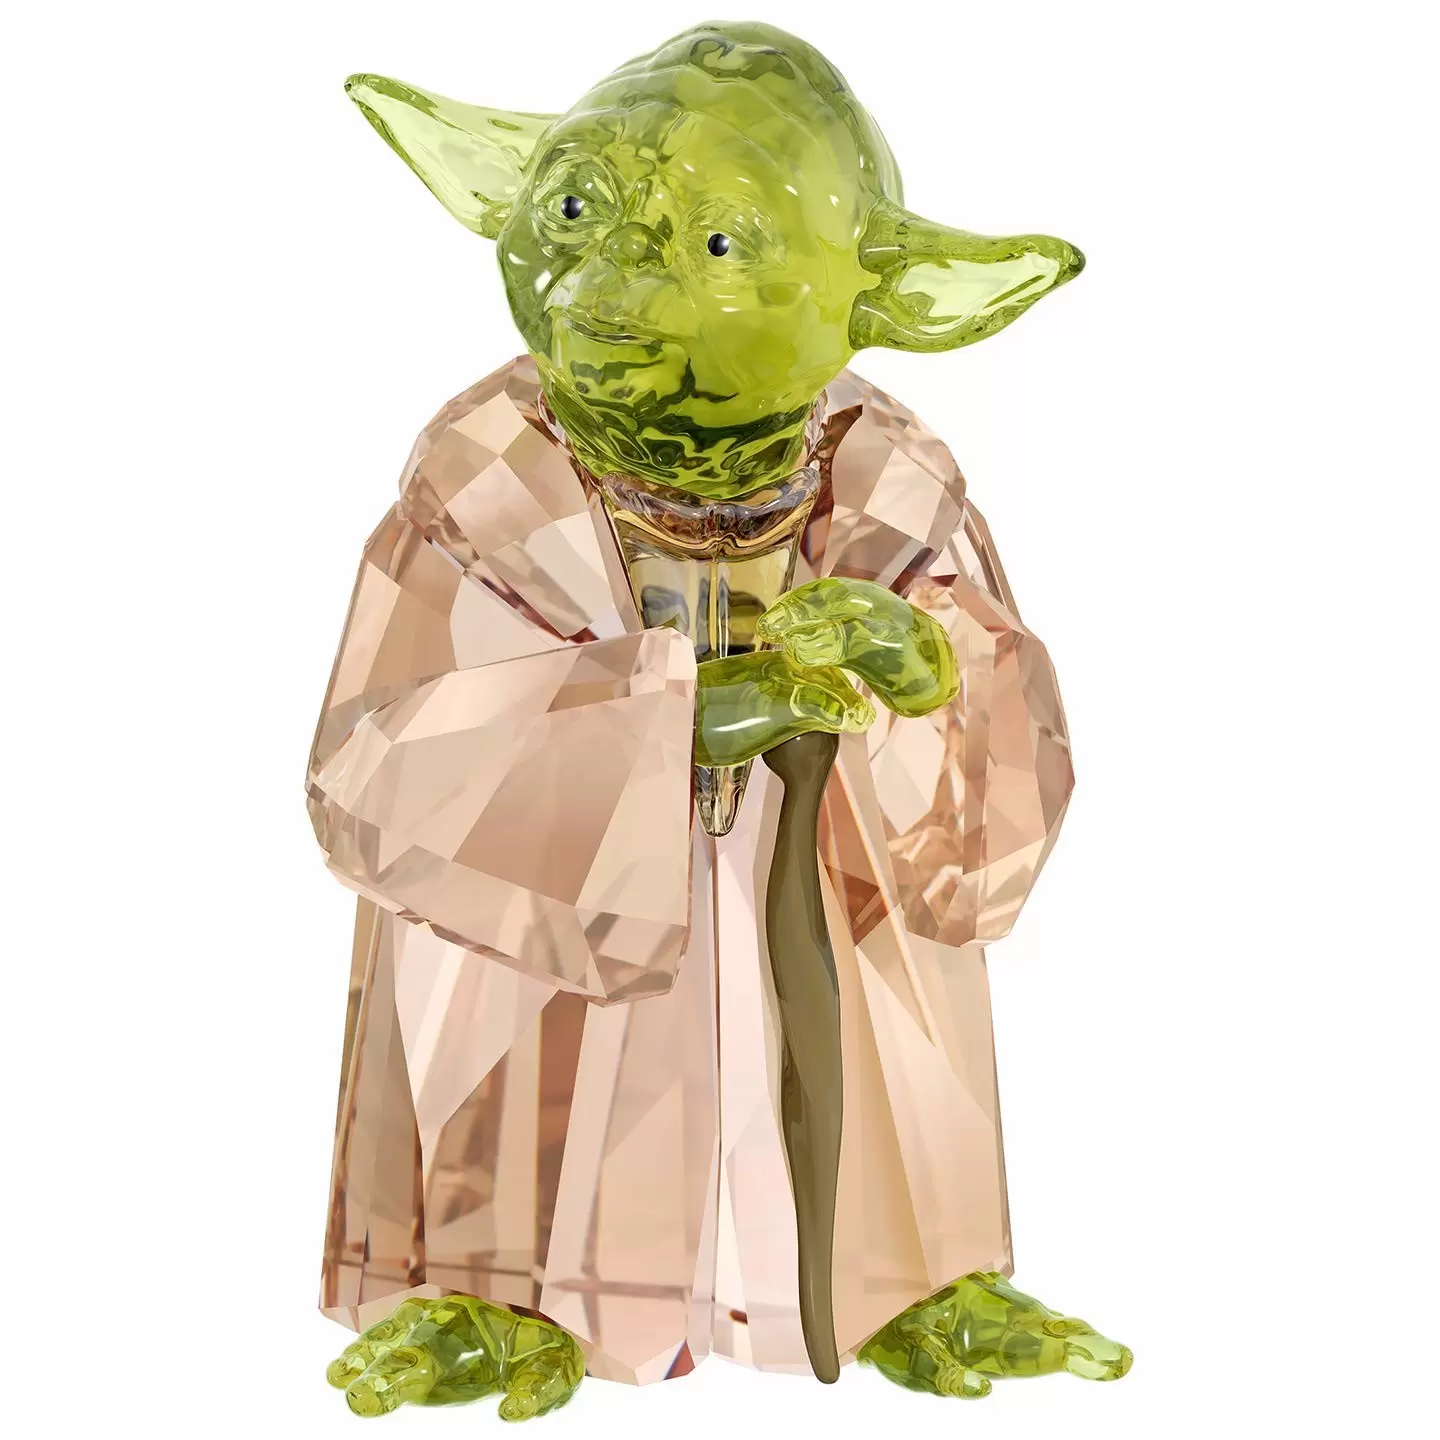 Swarovski Crystal Figures - Yoda